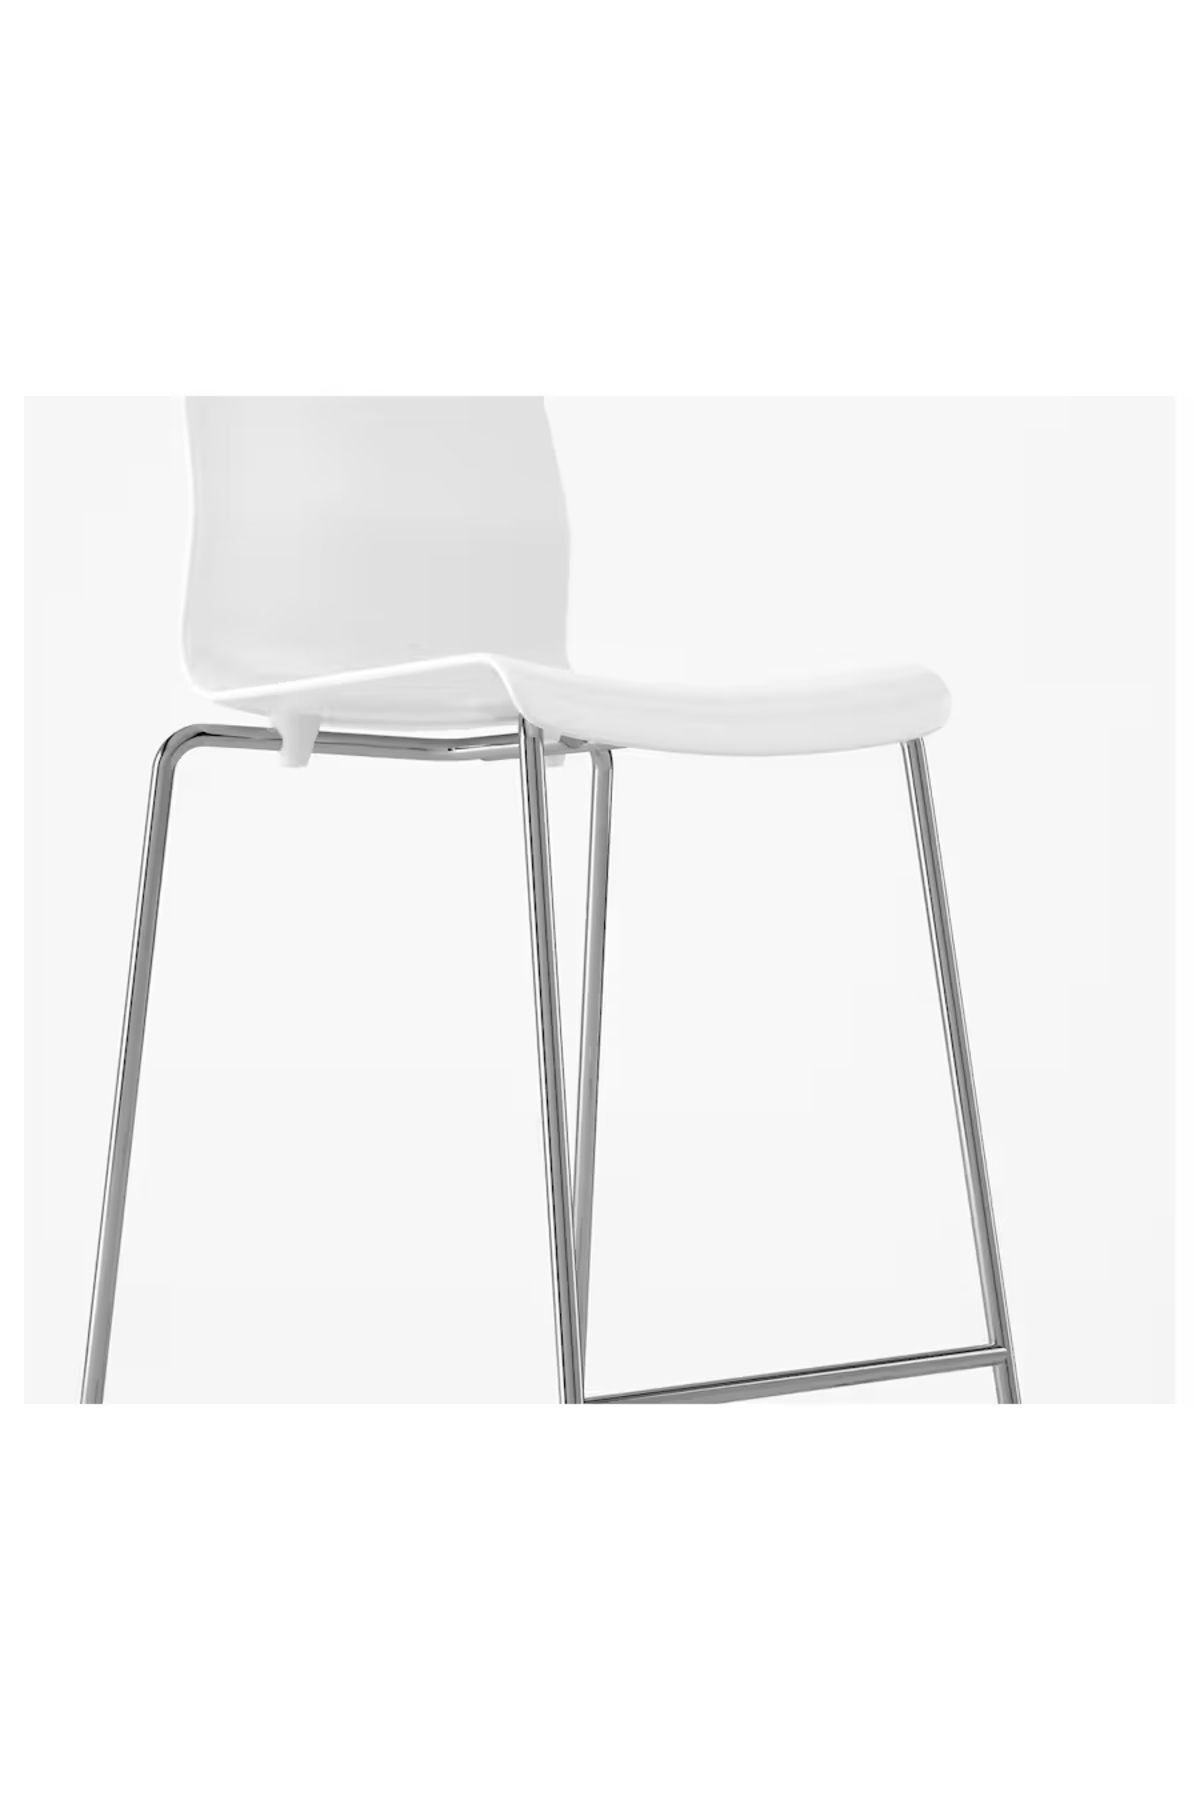 CNRWOOD (IKEA) Glenn Bar Sandalyesi, Beyaz-krom Kaplama